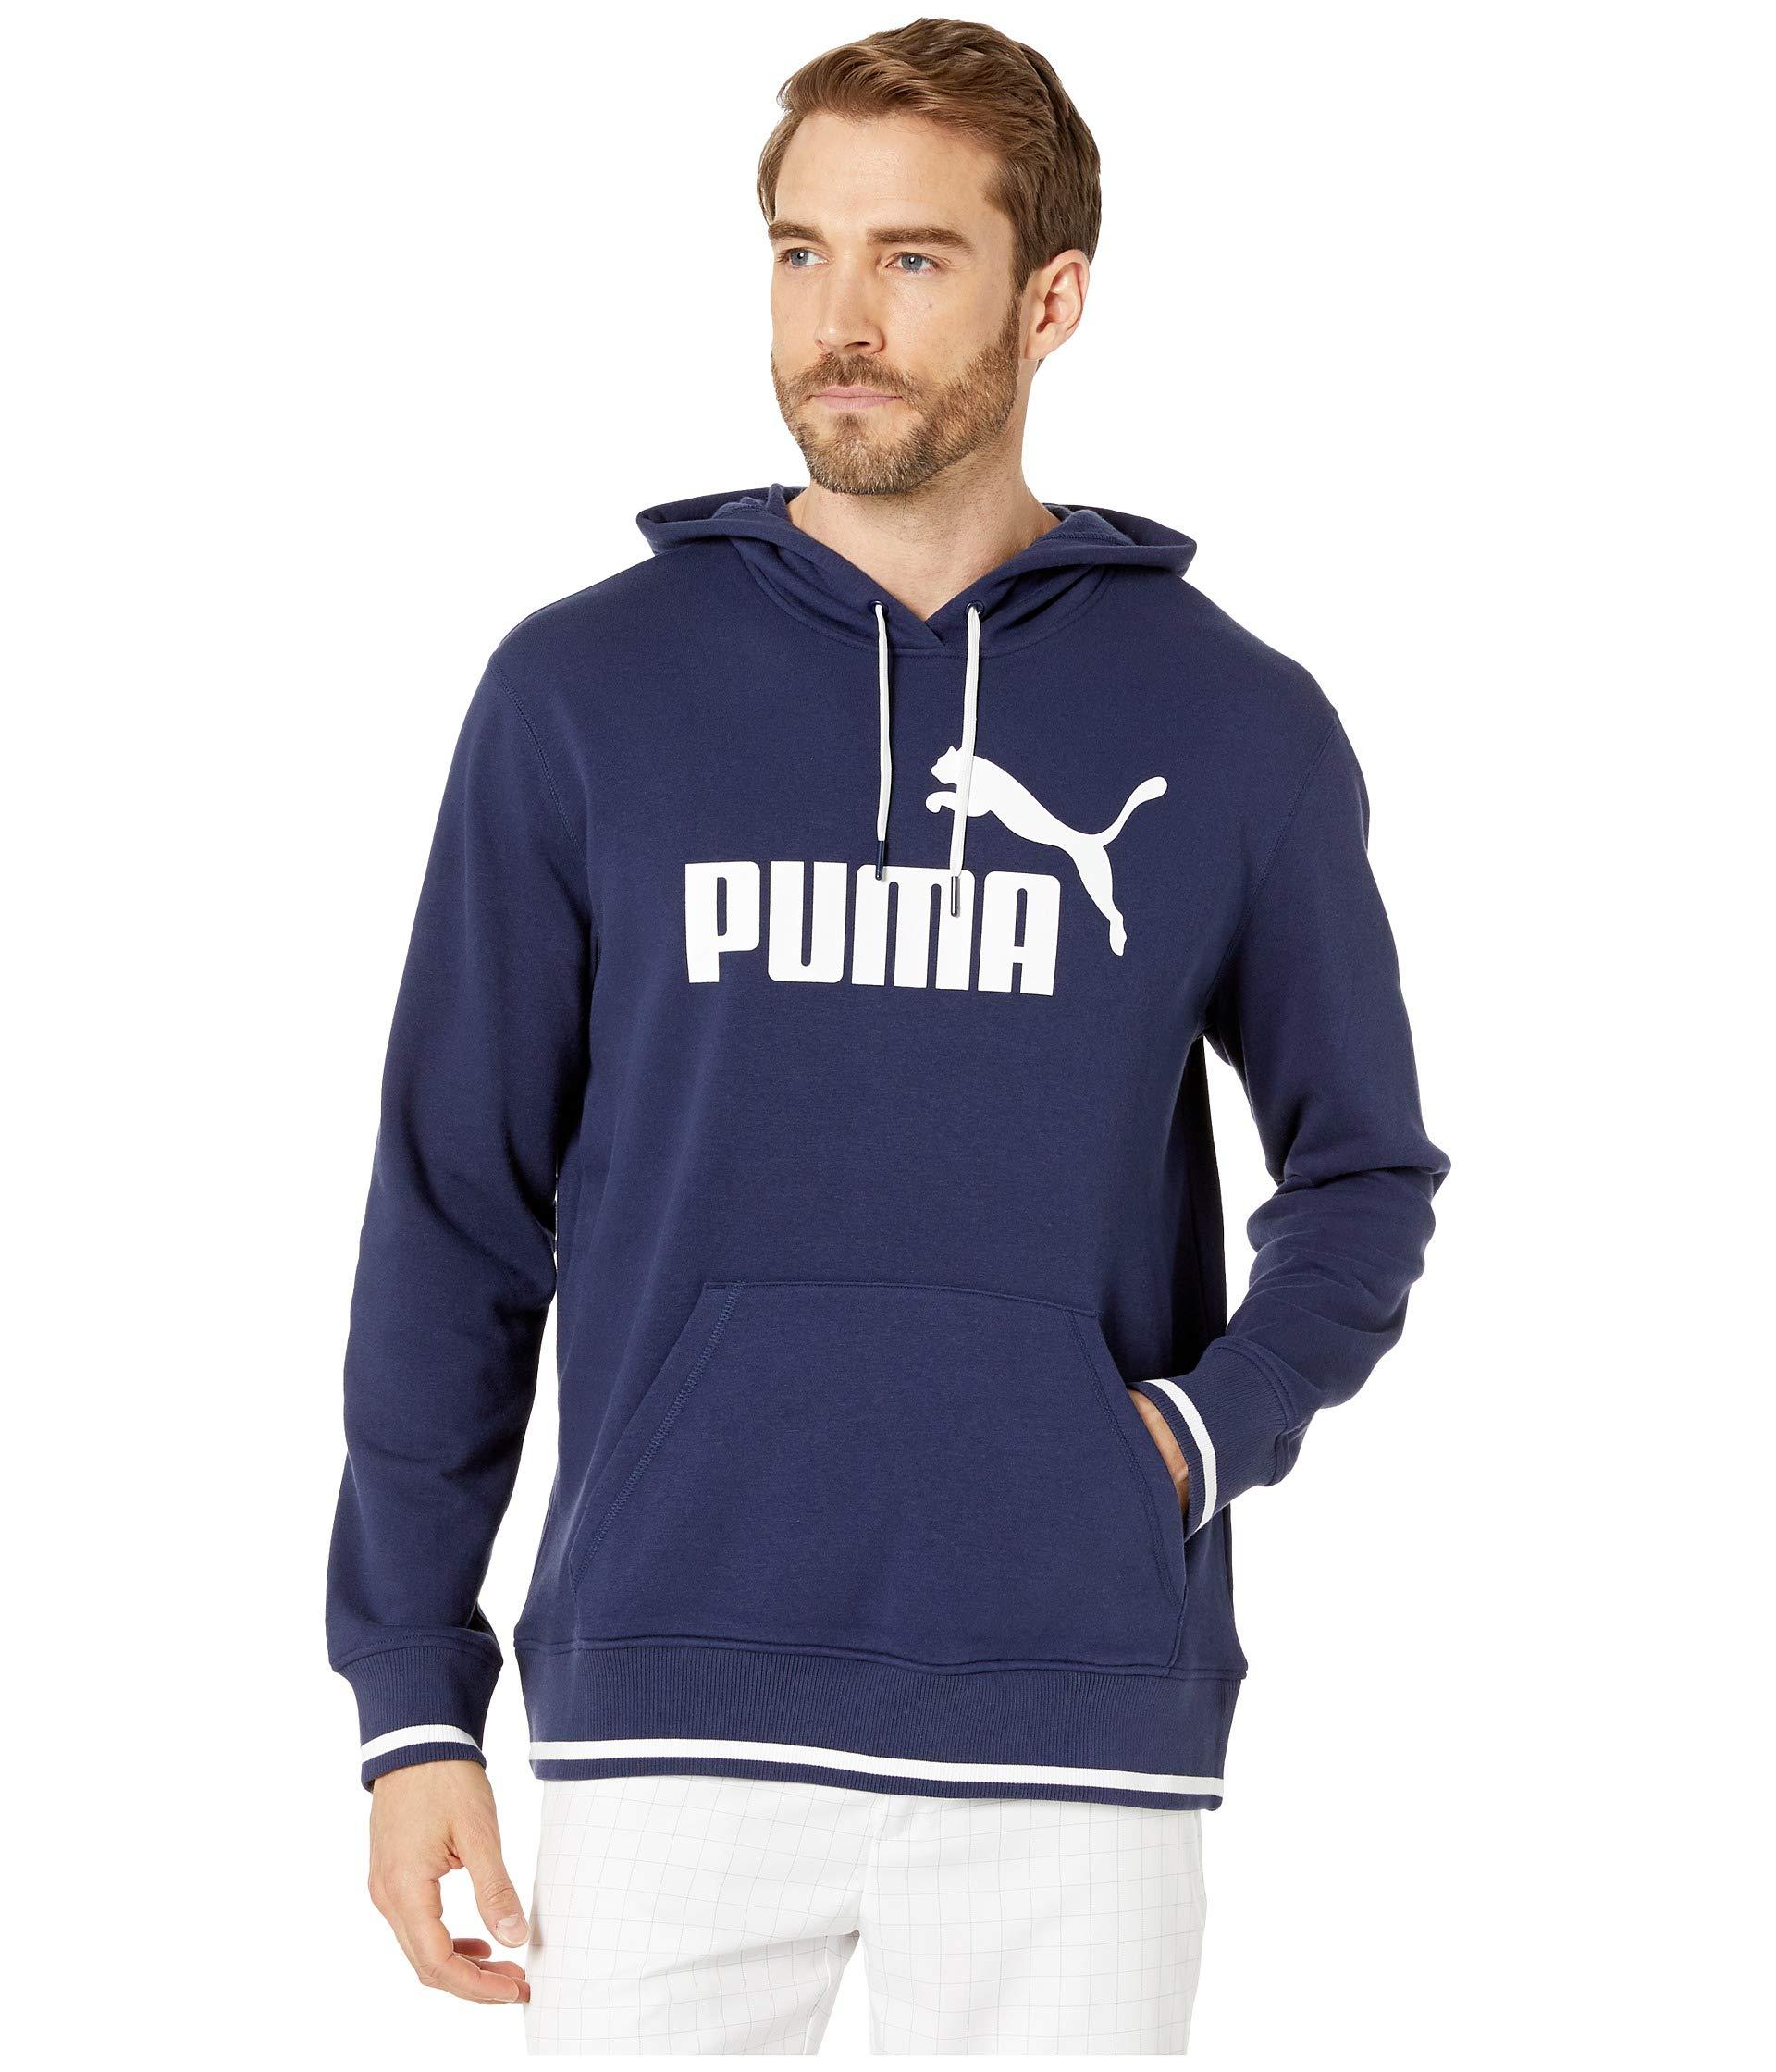 PUMA Cotton Logo Hoodie in Blue for Men - Lyst